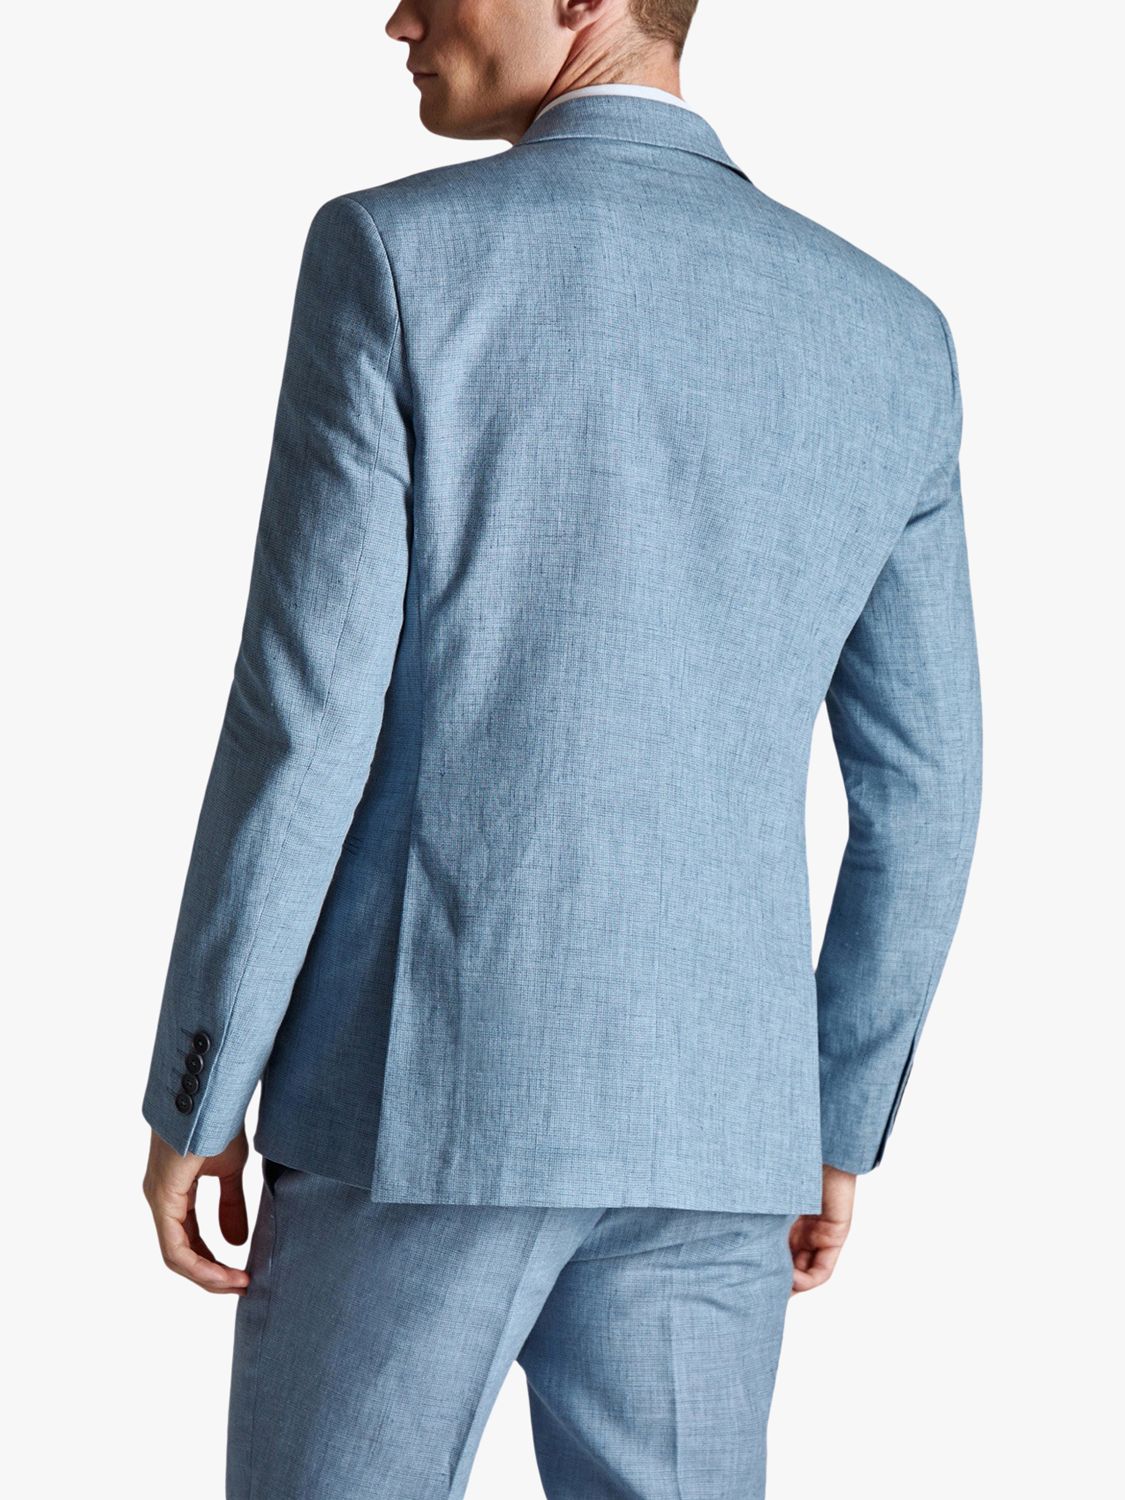 Ted Baker Hydra Linen Slim Fit Suit Jacket, Blue, 46R